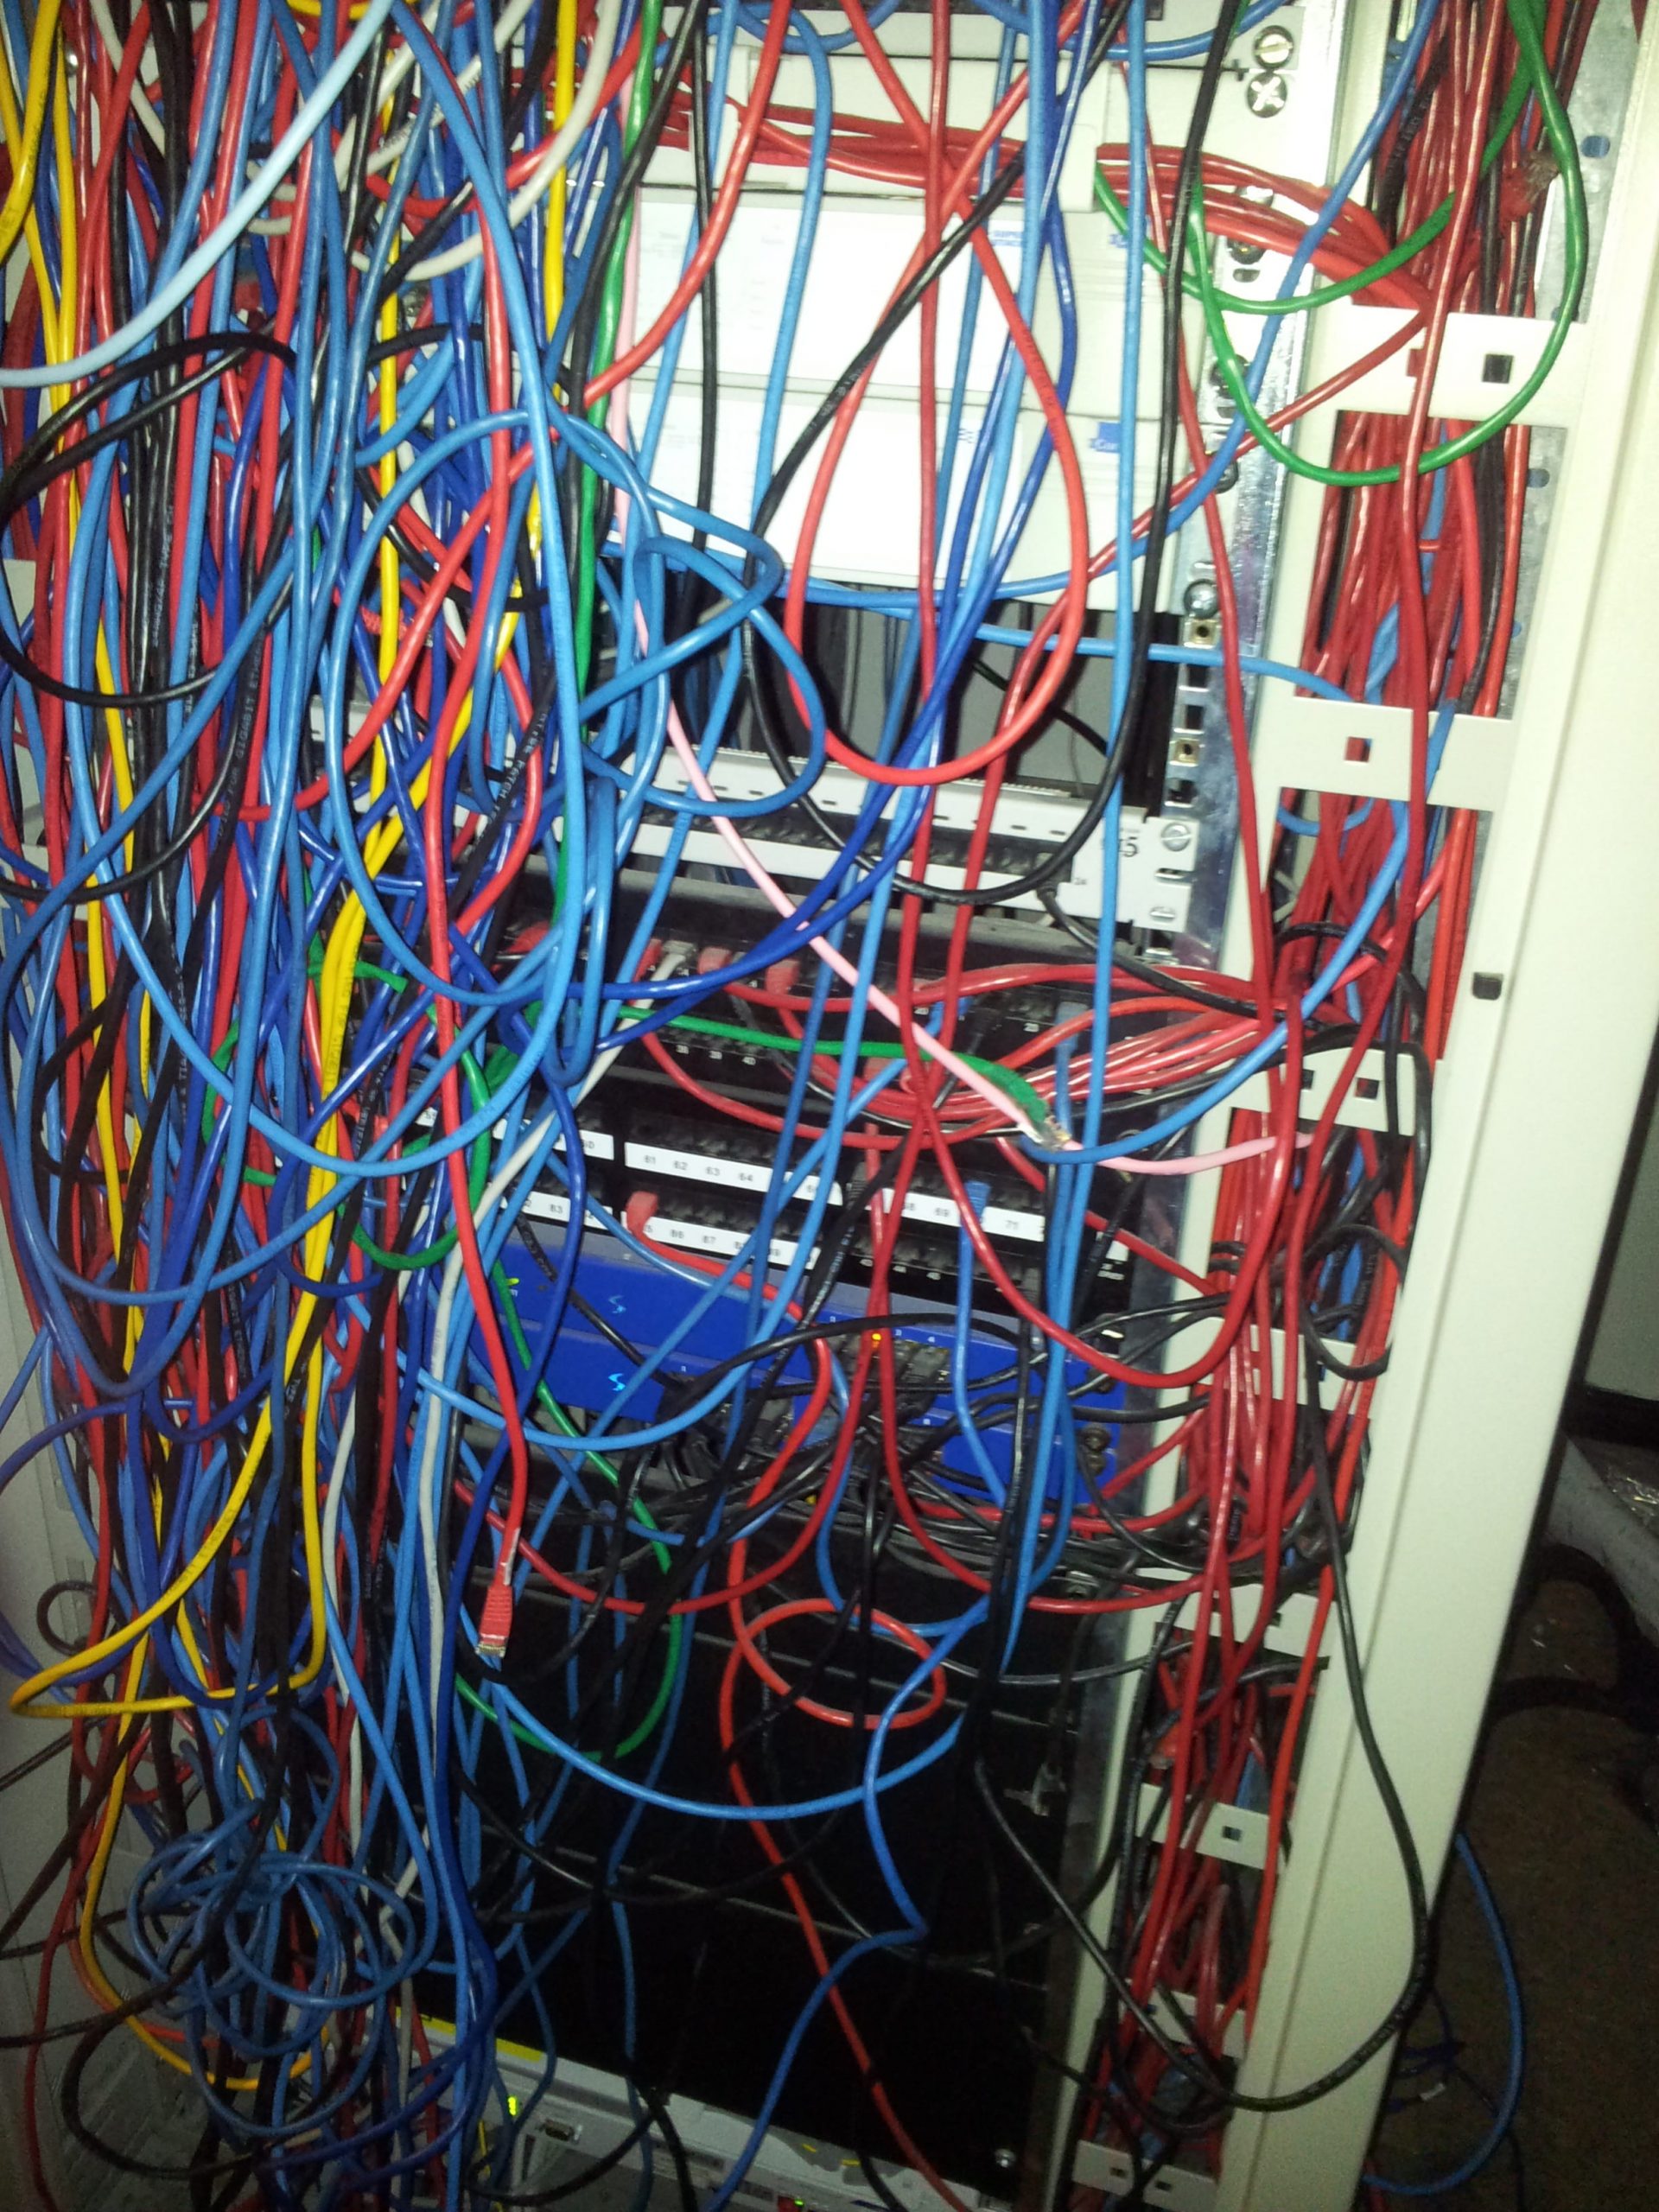 data cabling mess